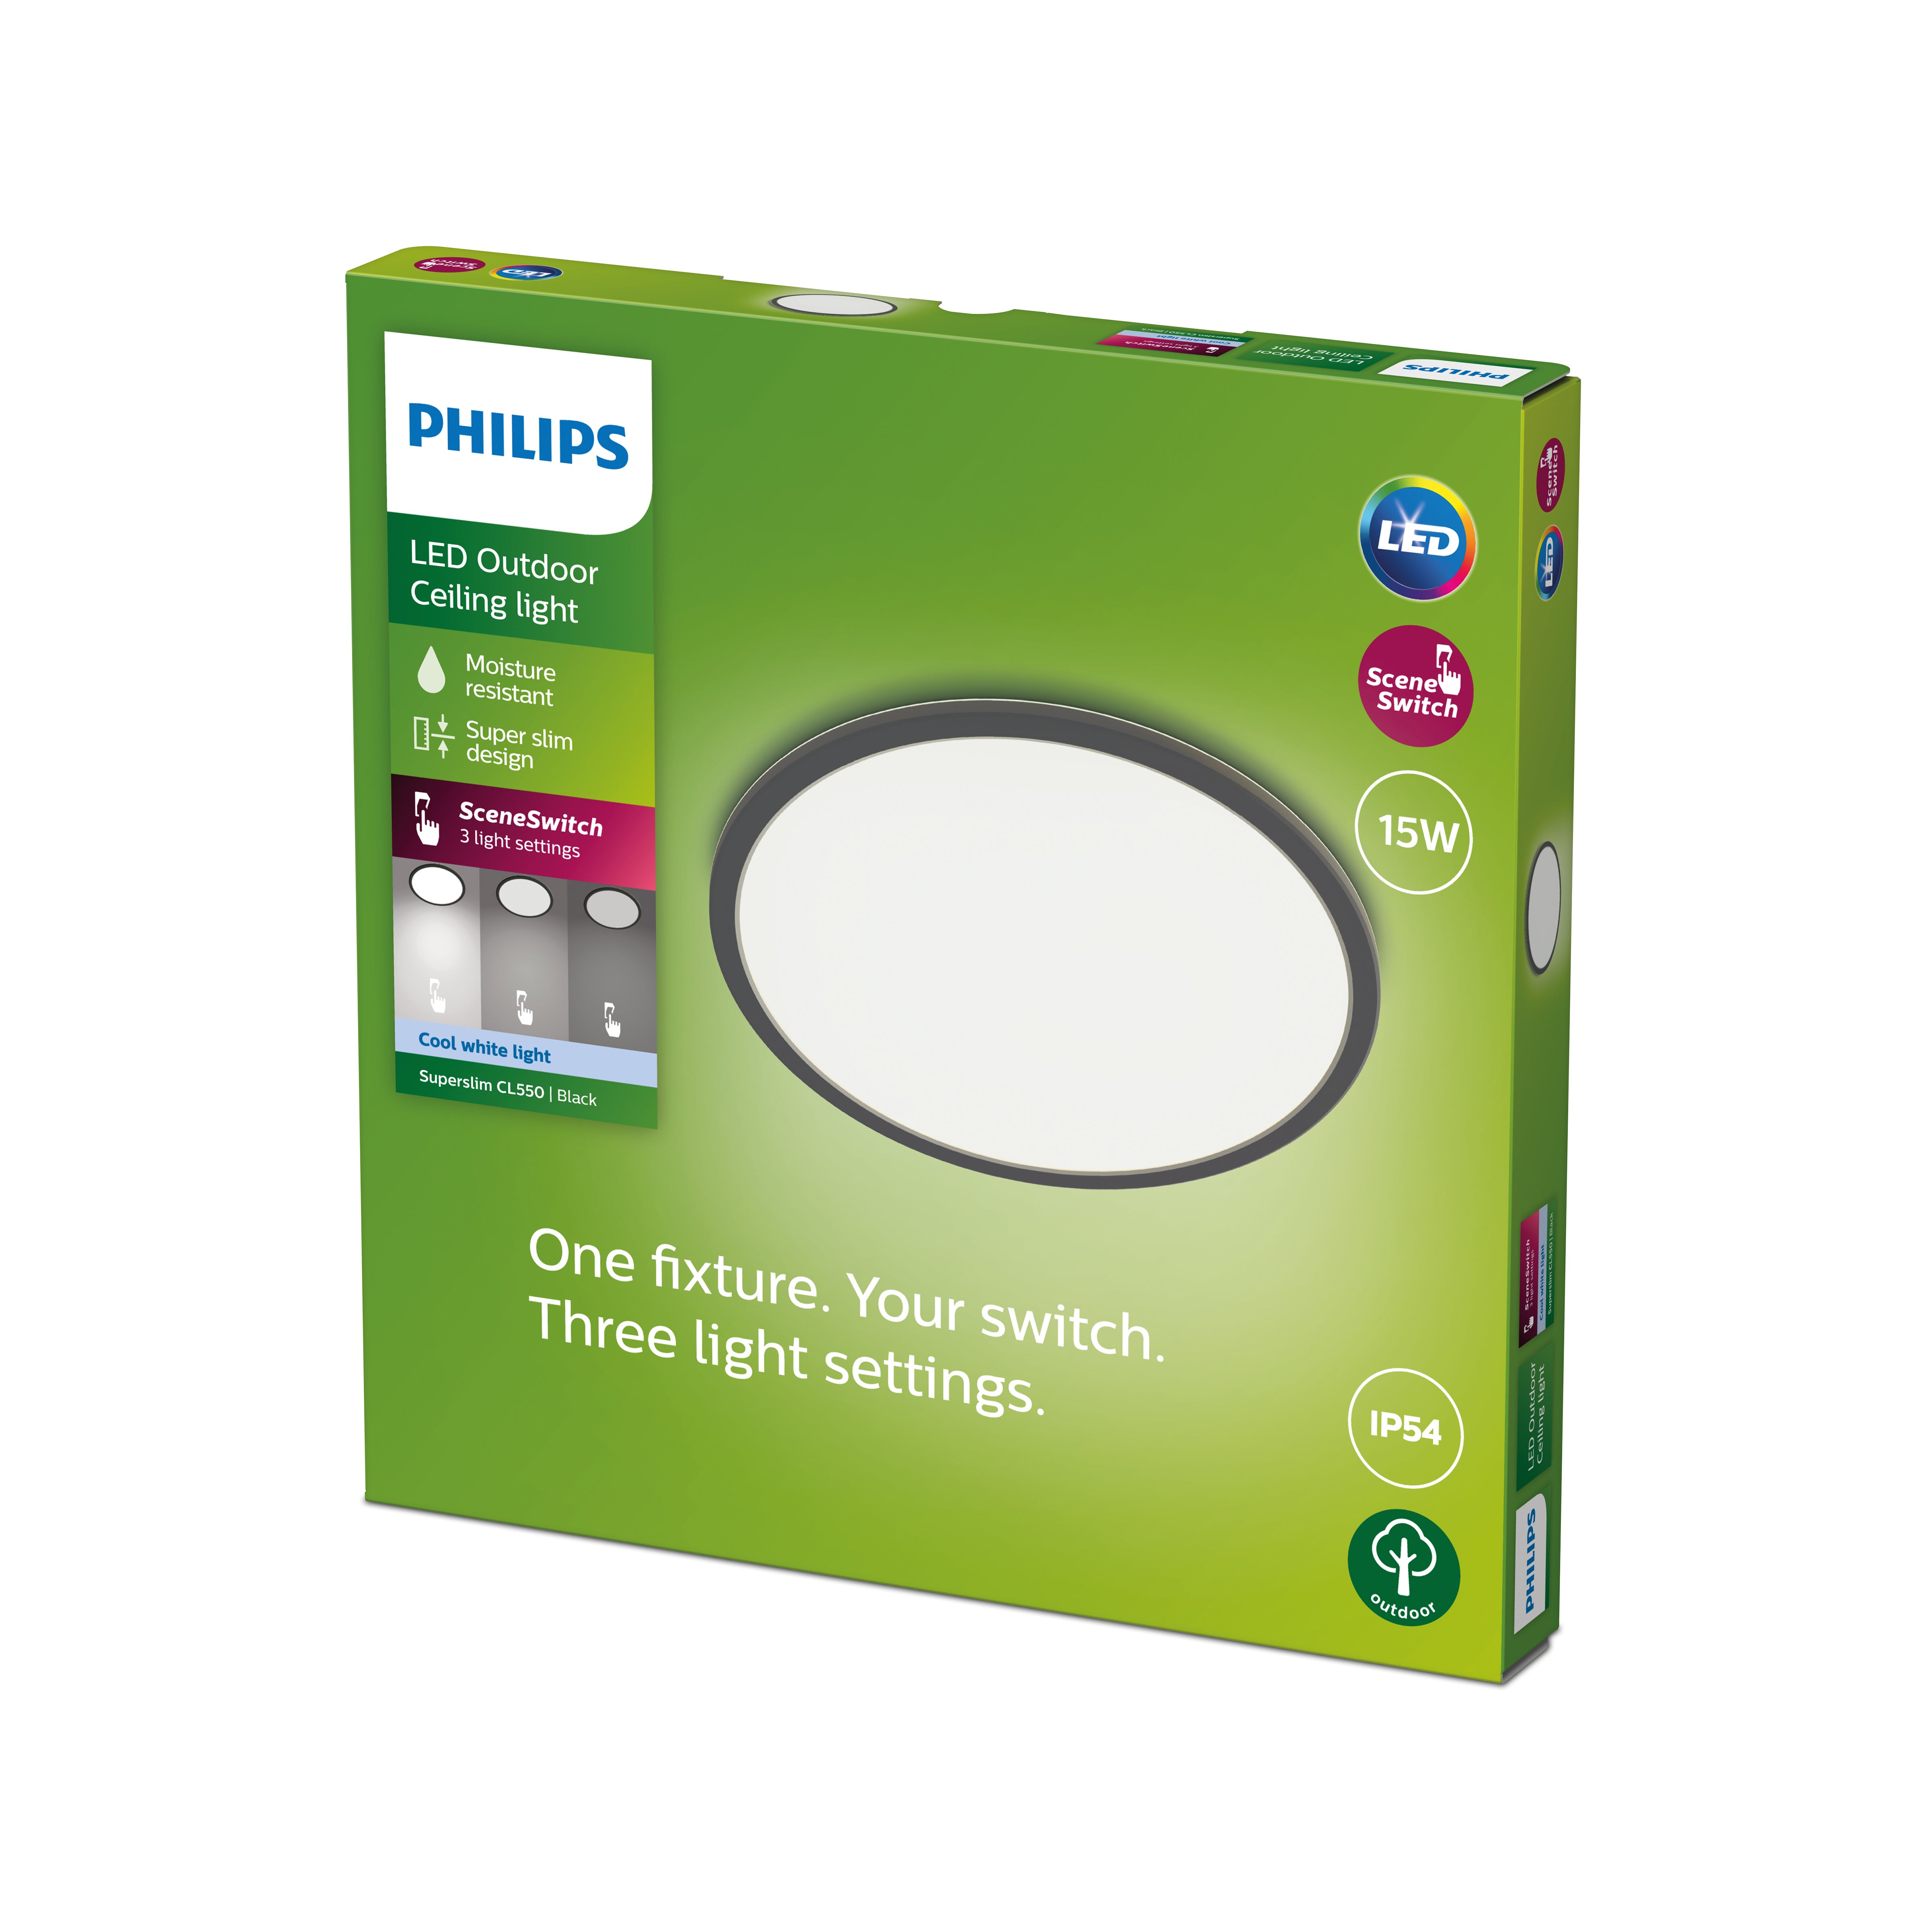 morgenmad Tekstforfatter omdømme Philips Superslim Integrated LED Outdoor Ceiling Light, Cool White | Dunelm